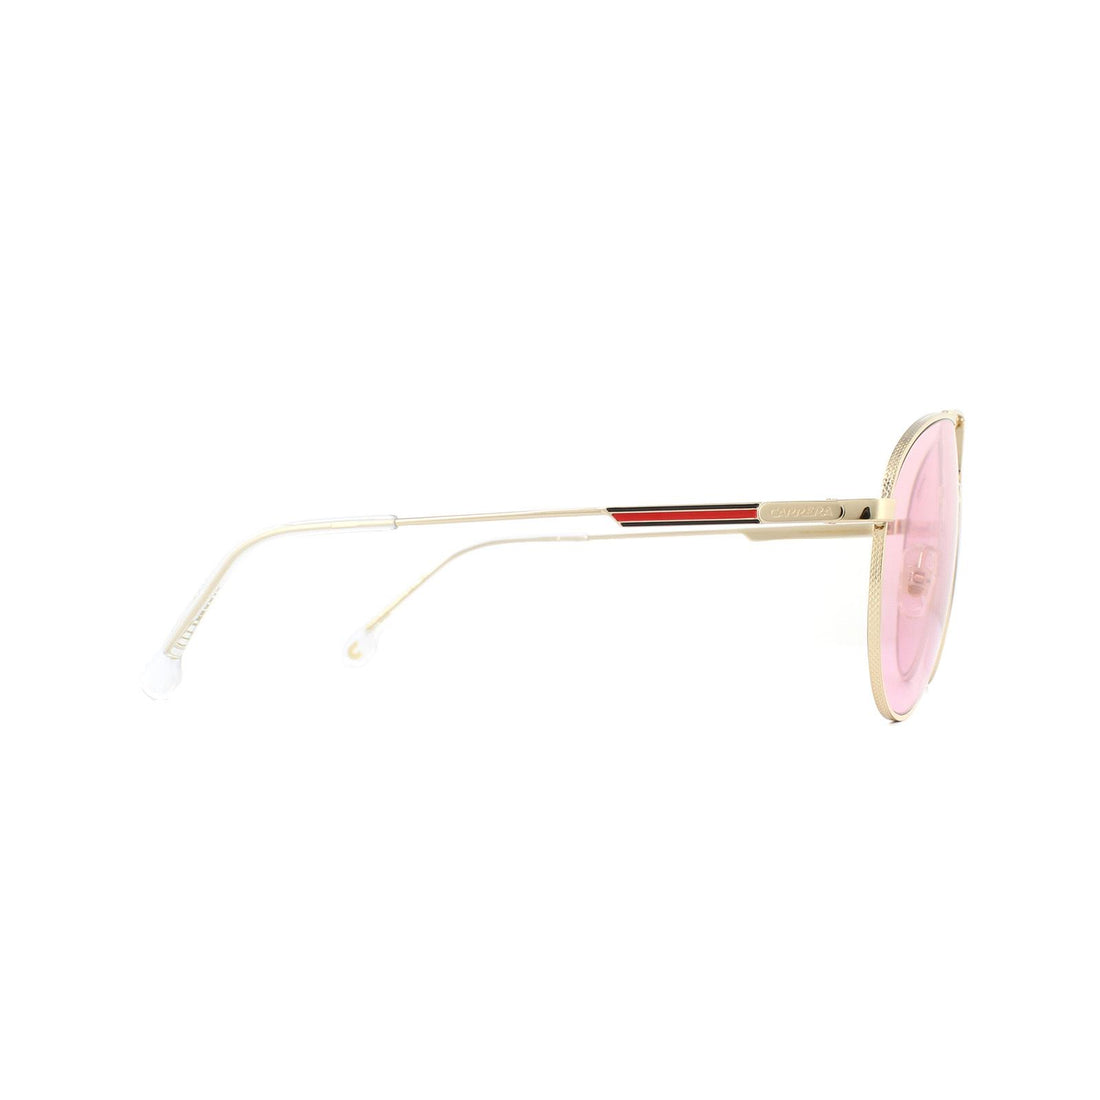 Carrera 1025/S Sunglasses